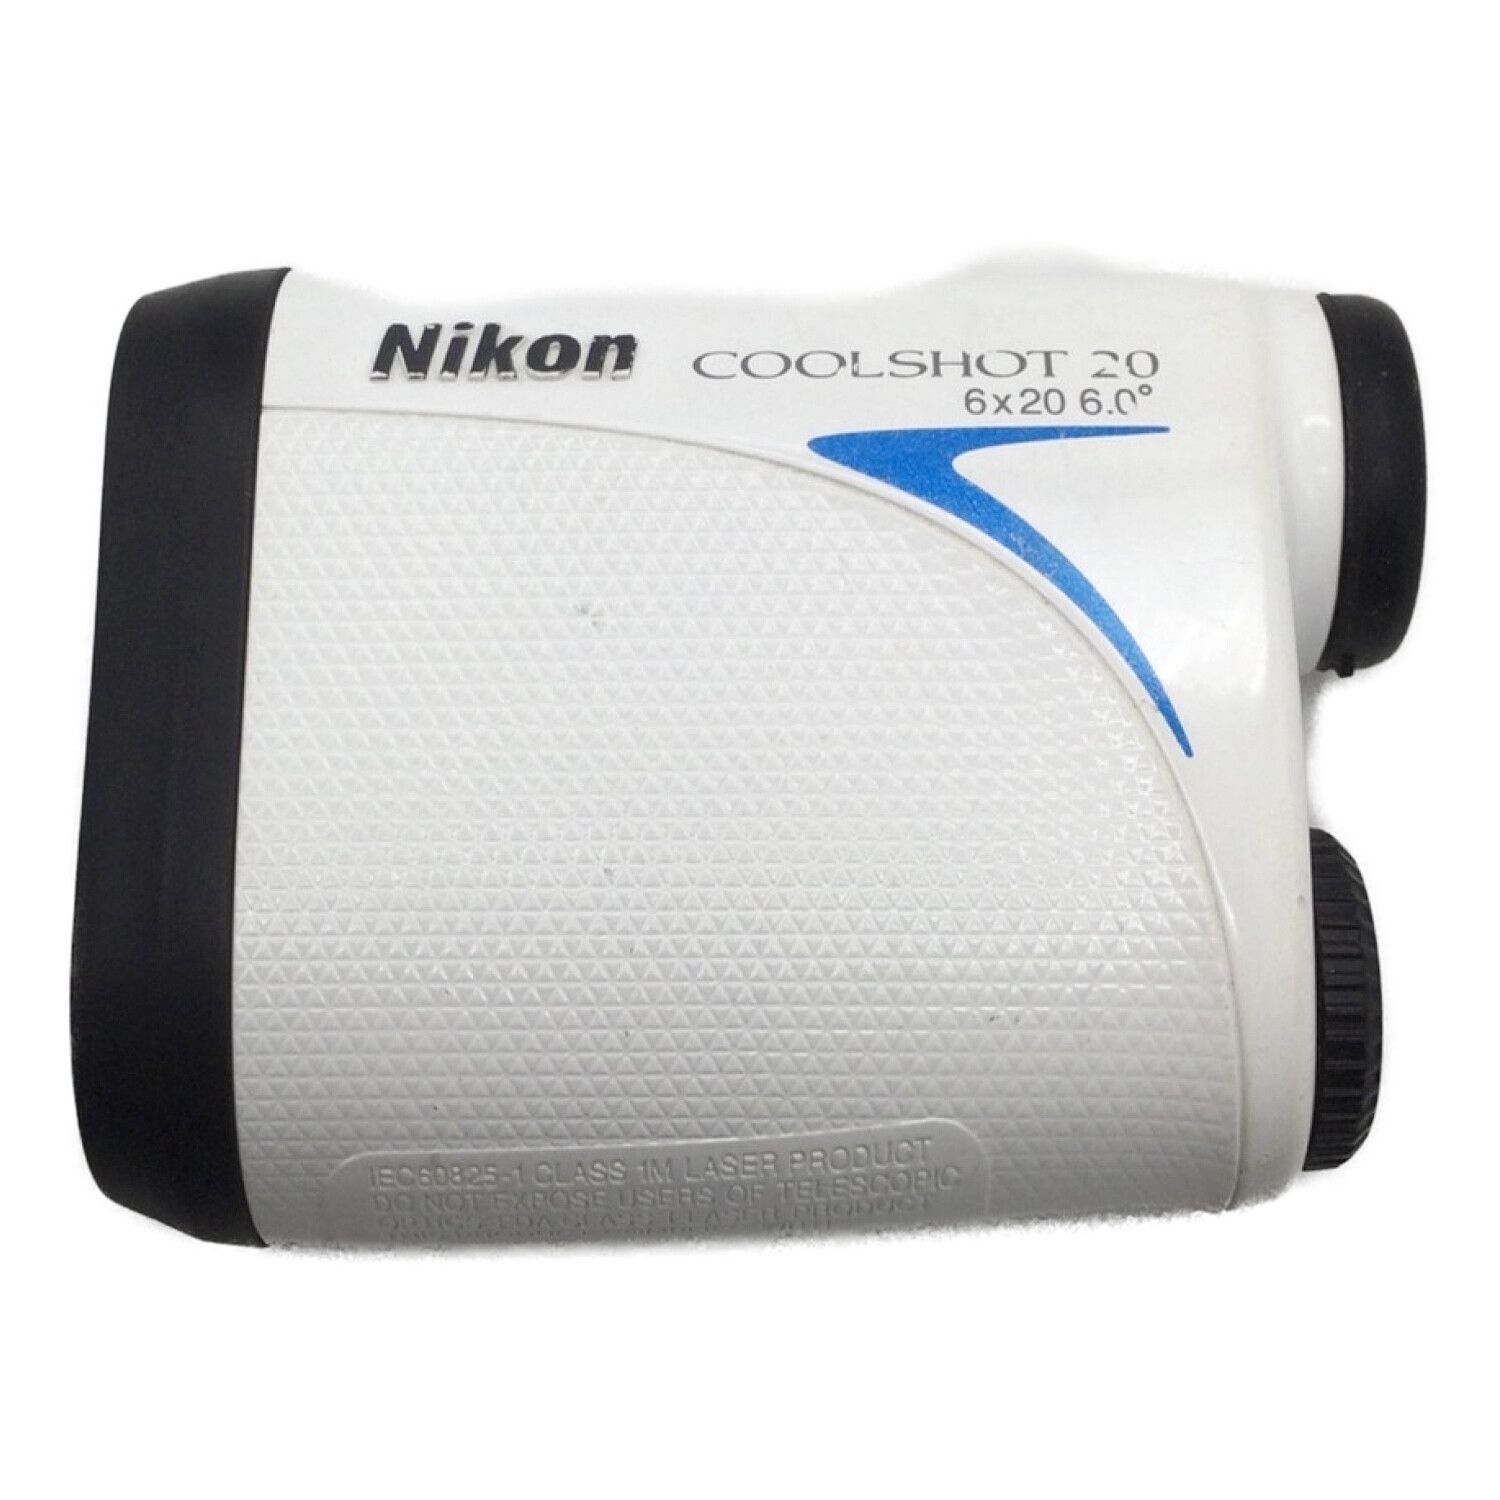 Nikon COOLSHOT20 6x20 6.0° レーザー距離計 - ラウンド用品・アクセサリー